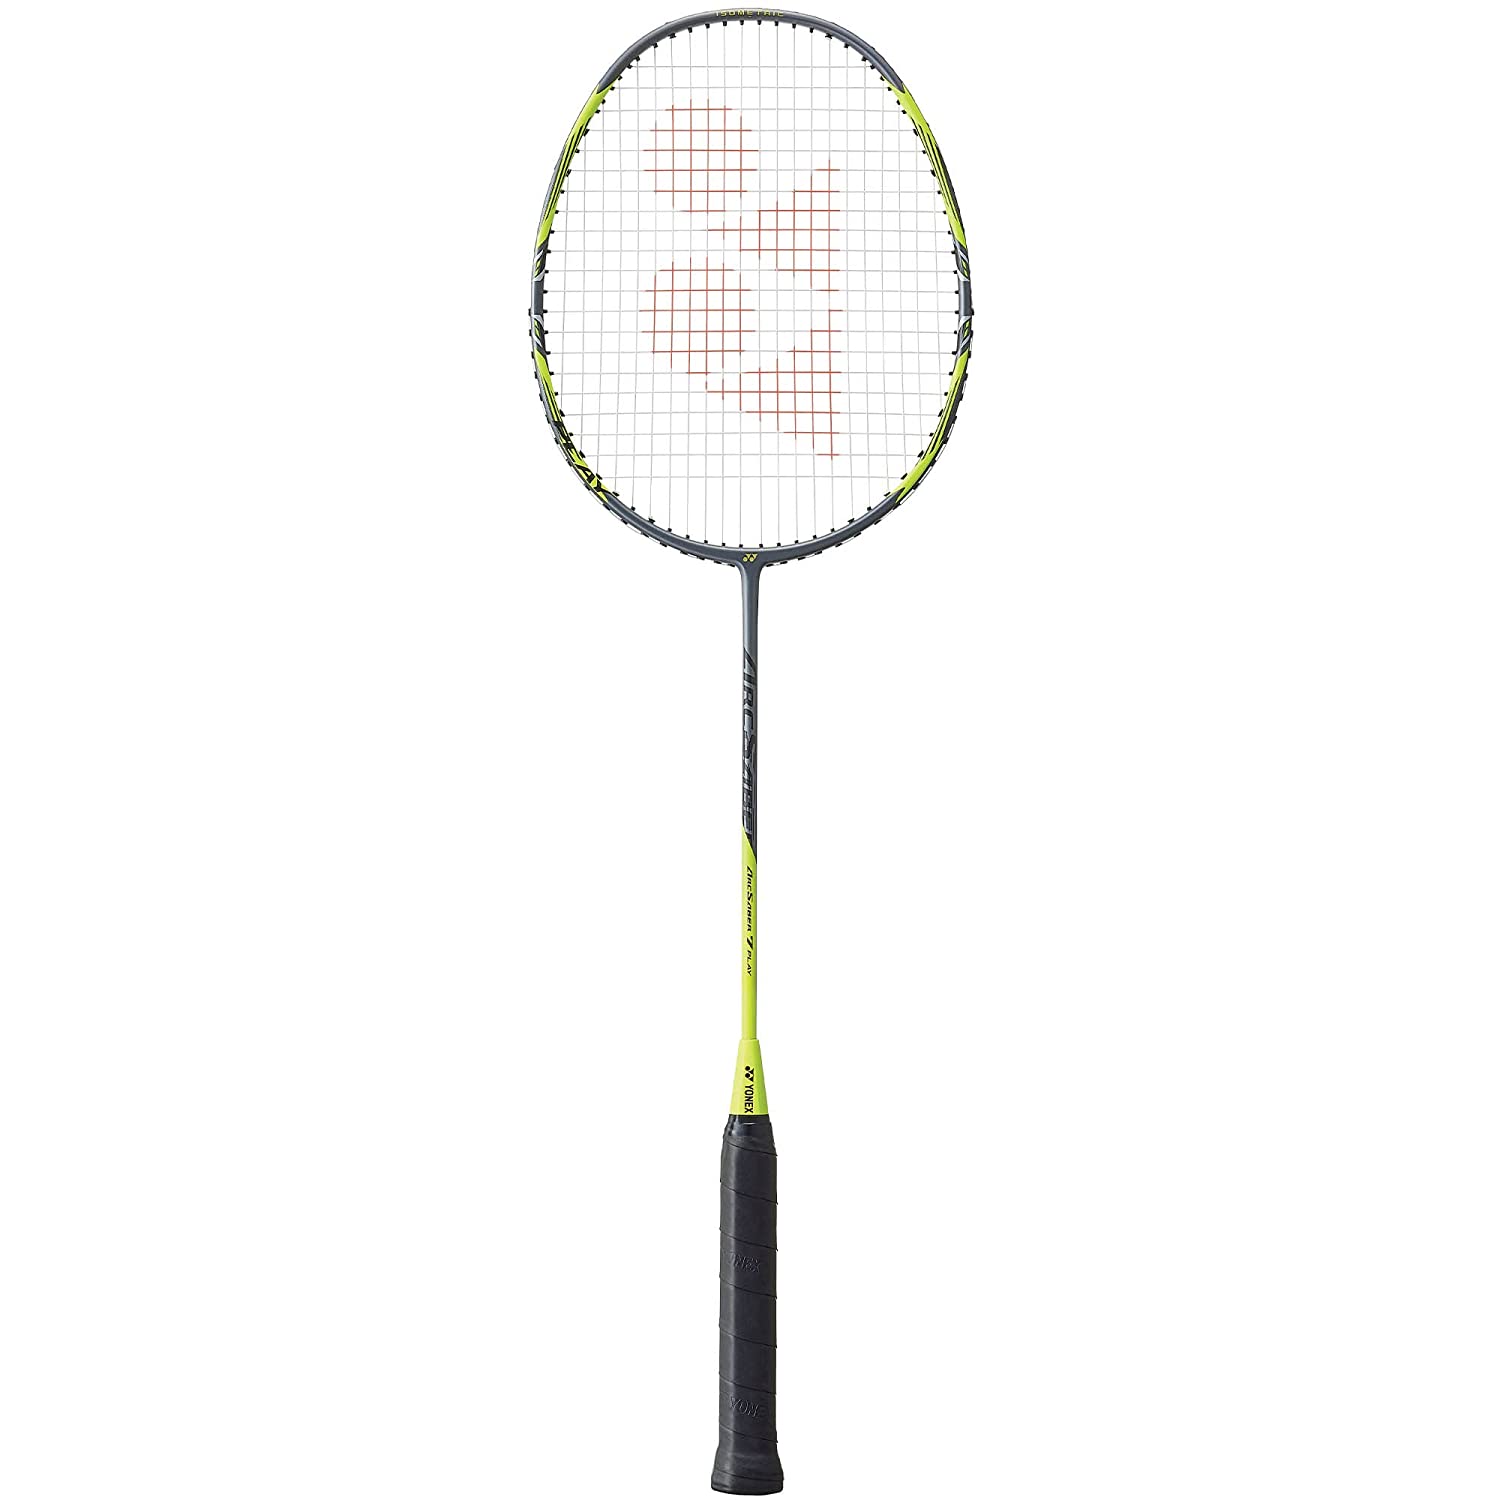 YONEX Arcsaber 7 Play Strung Graphite Badminton Racket with Full Cover (Grey / Yellow) sppartos